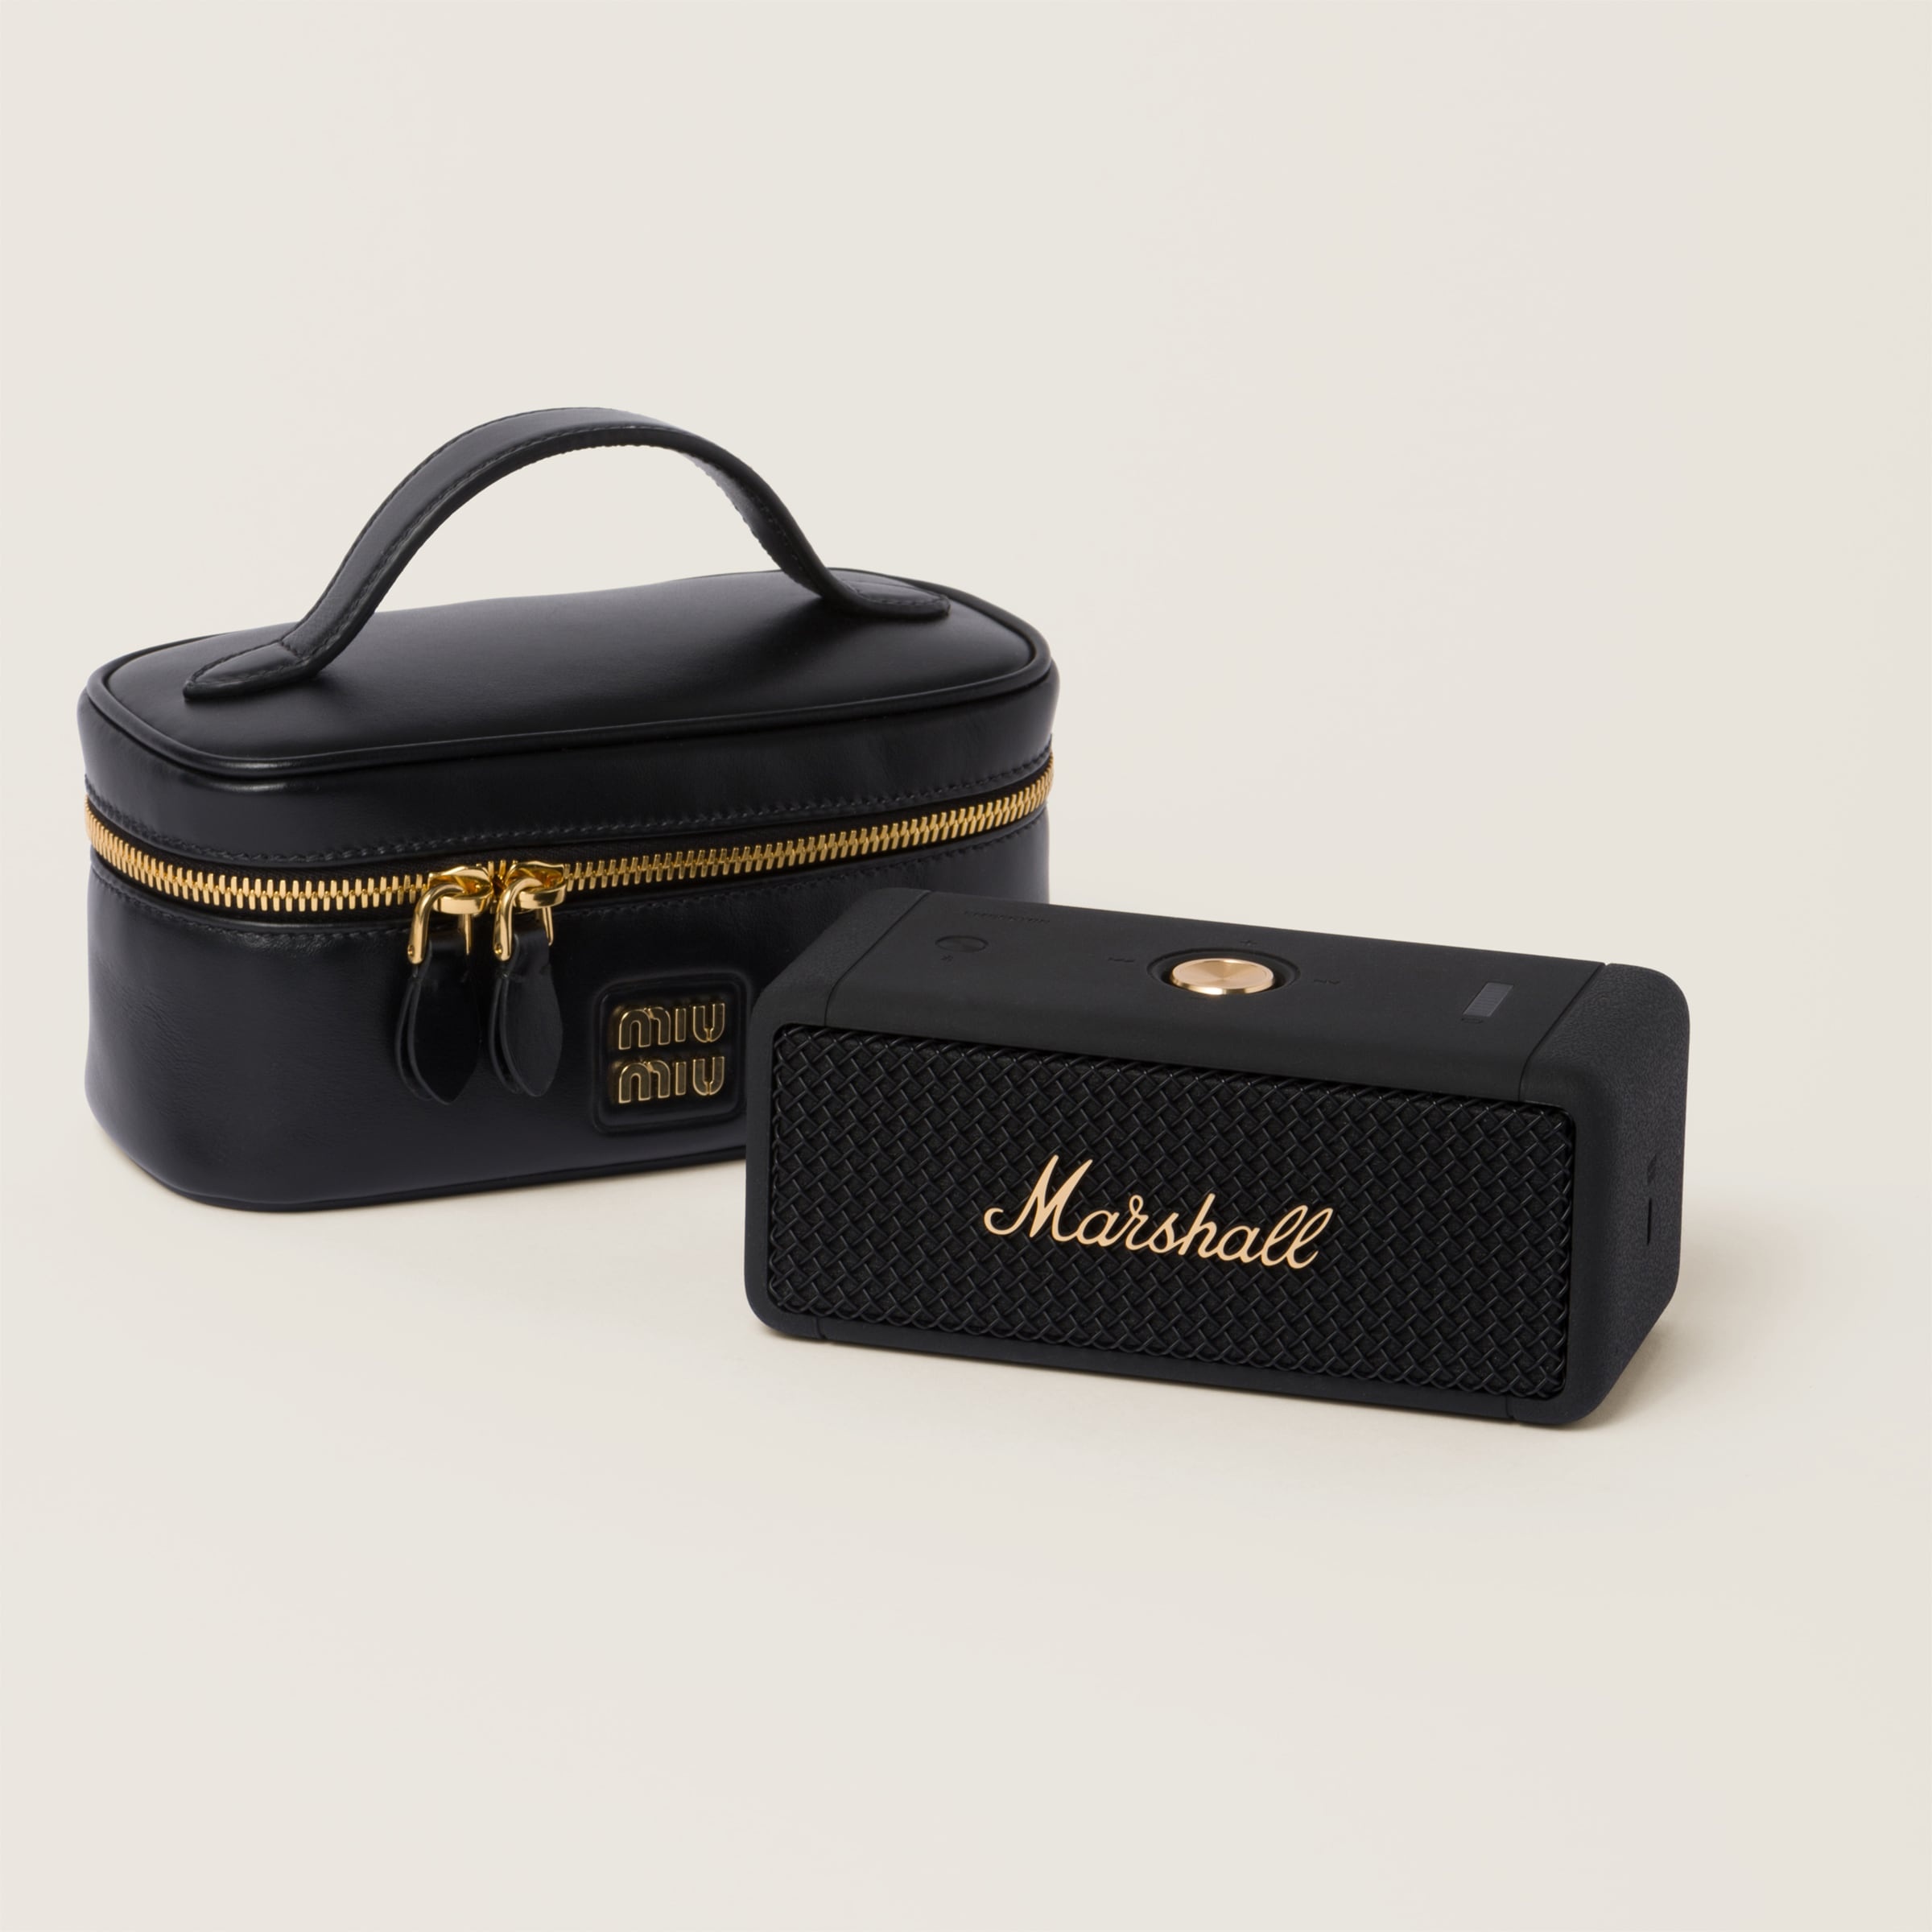 Marshall X Miu Miu speaker with leather case - 2